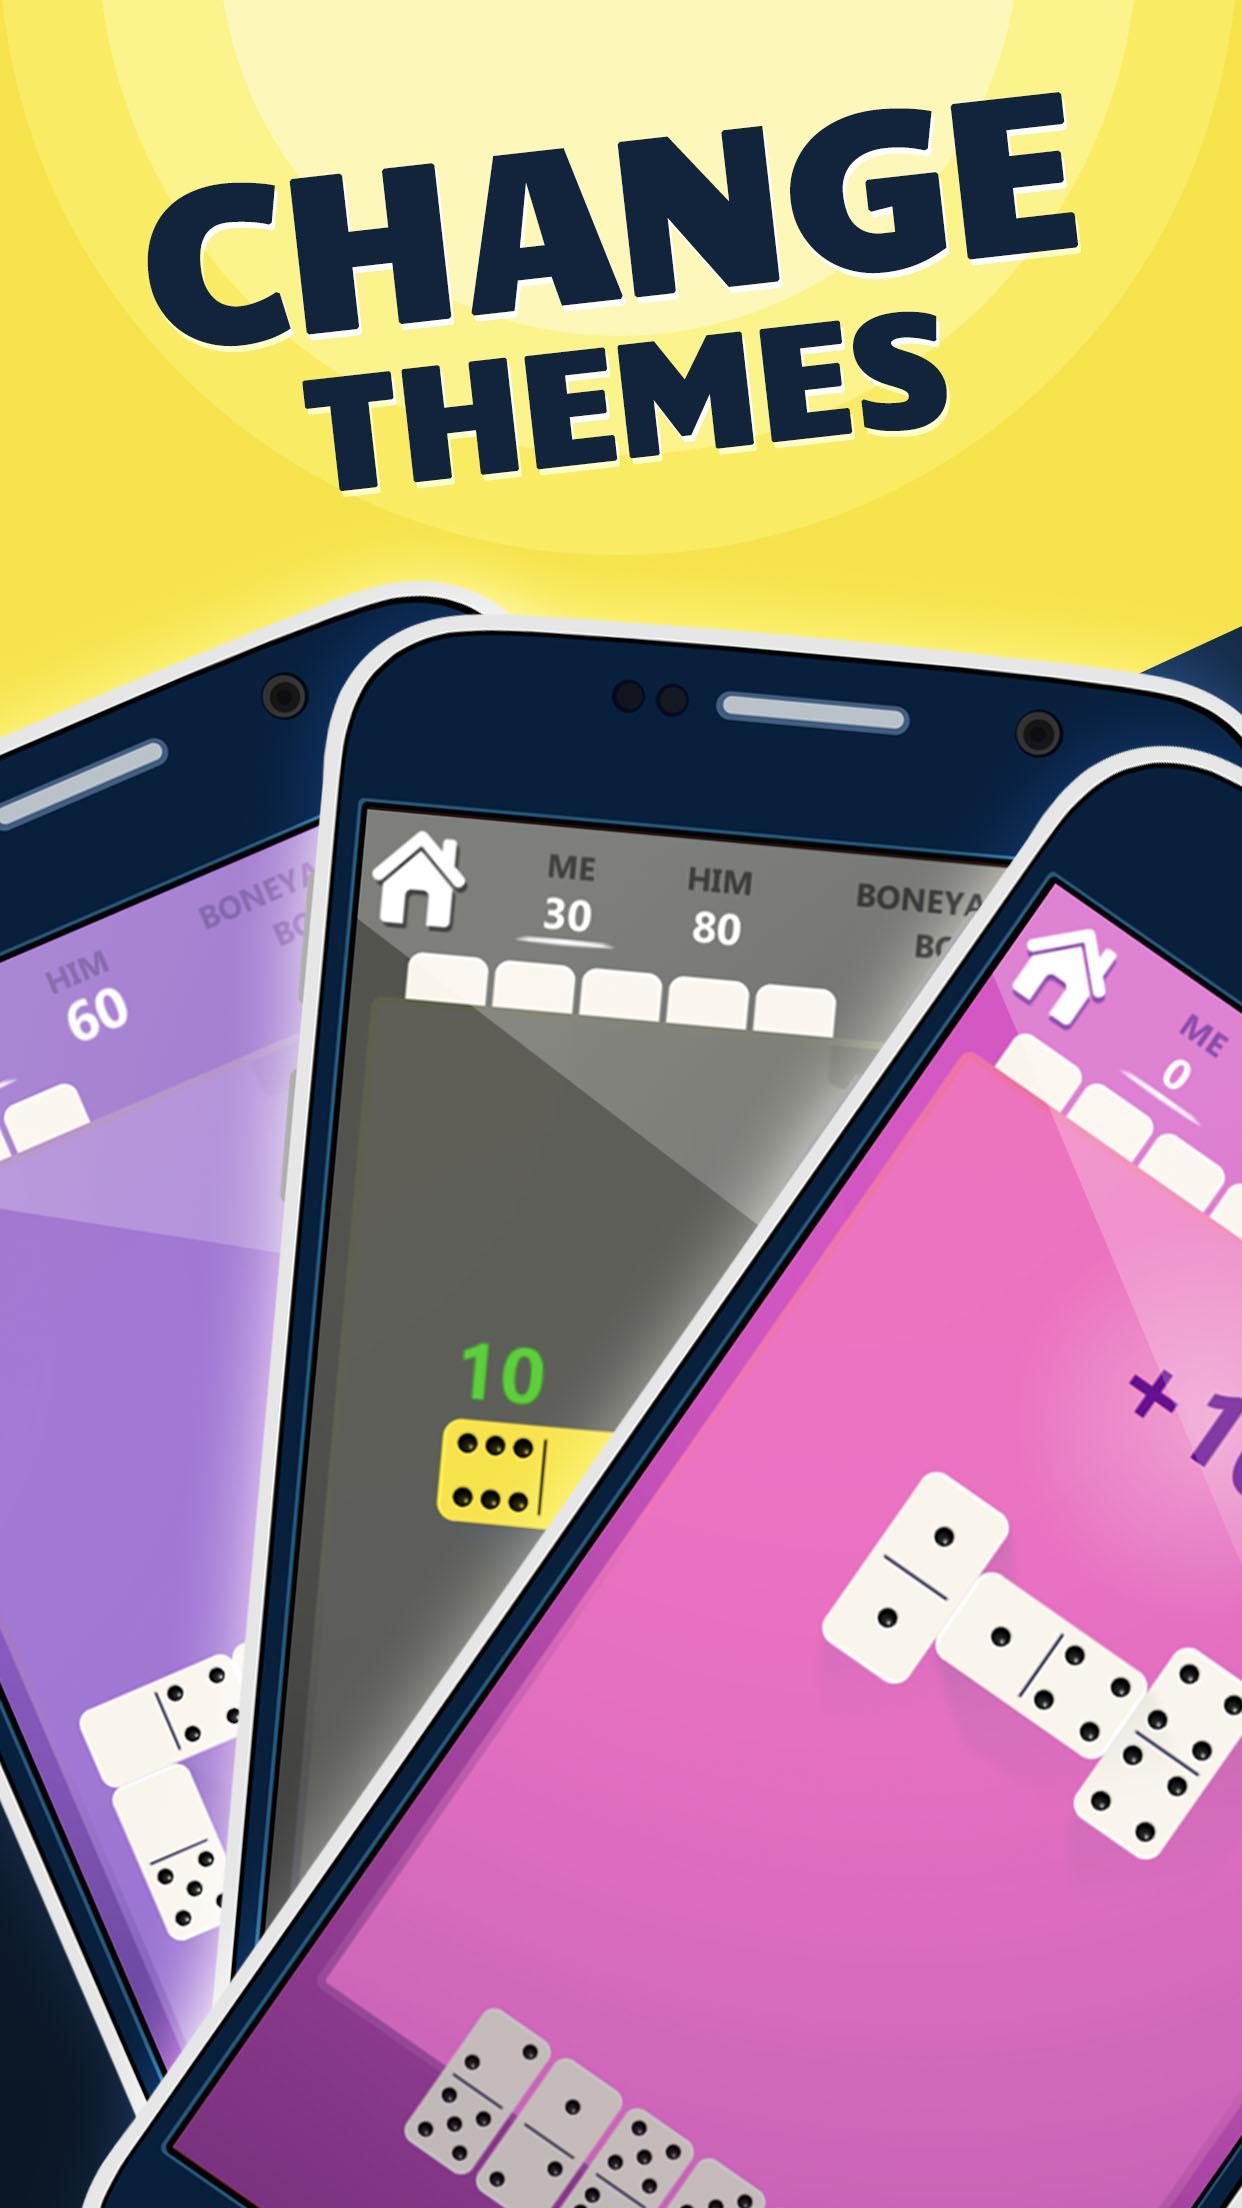 Dominoes Best Dominos Game versão móvel andróide iOS apk baixar  gratuitamente-TapTap